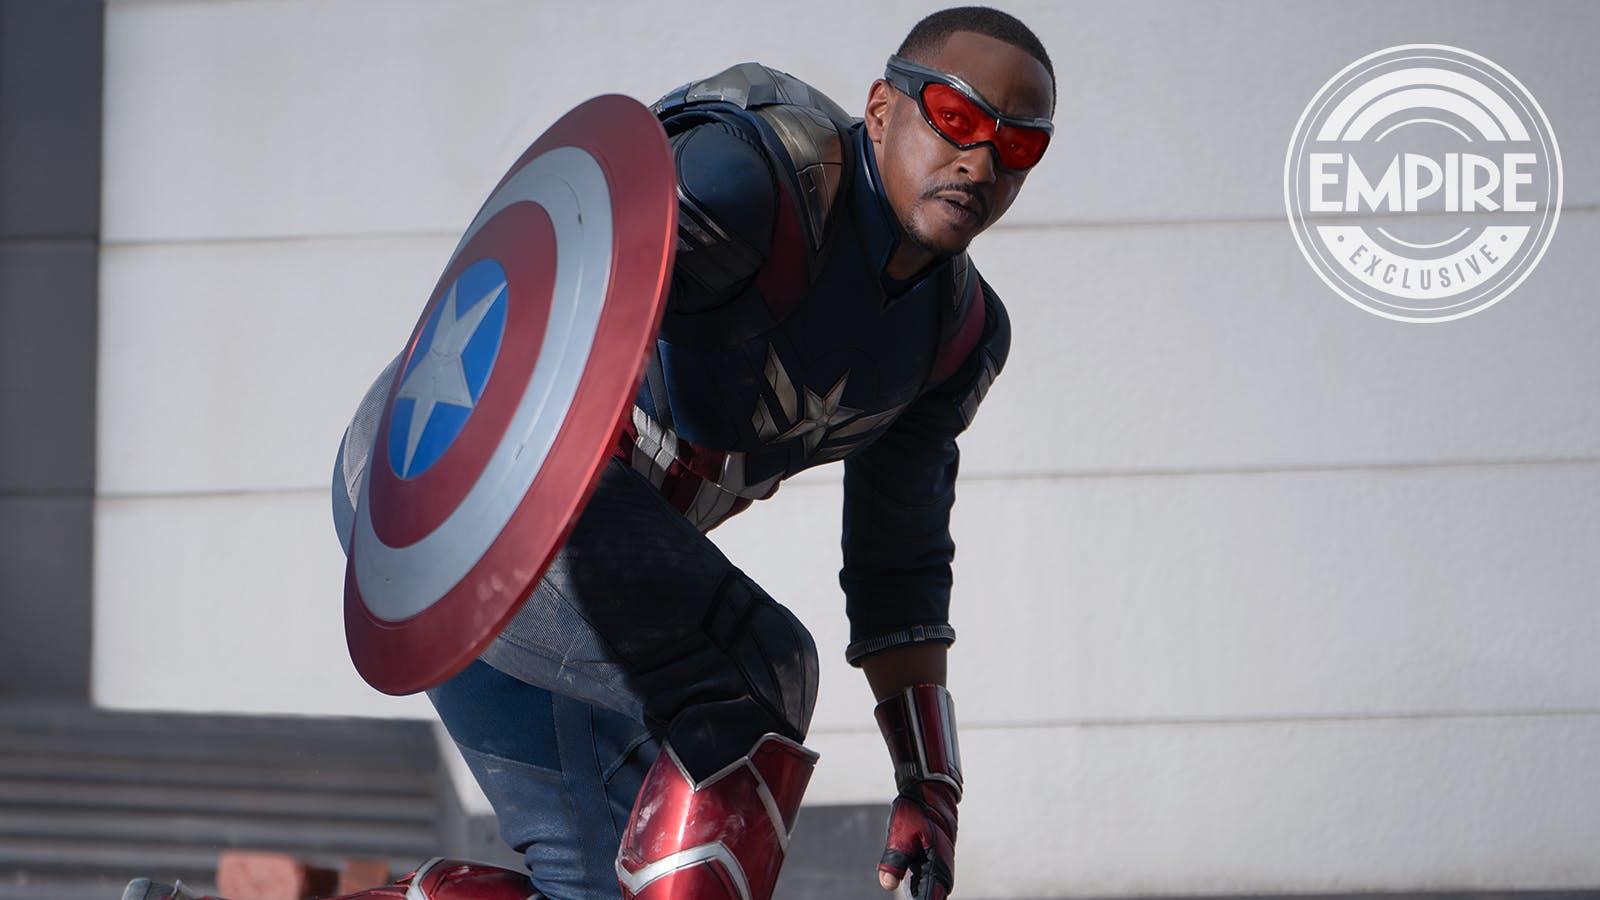 Captain America: Brave New World Image Reveals New Suit for Sam Wilson